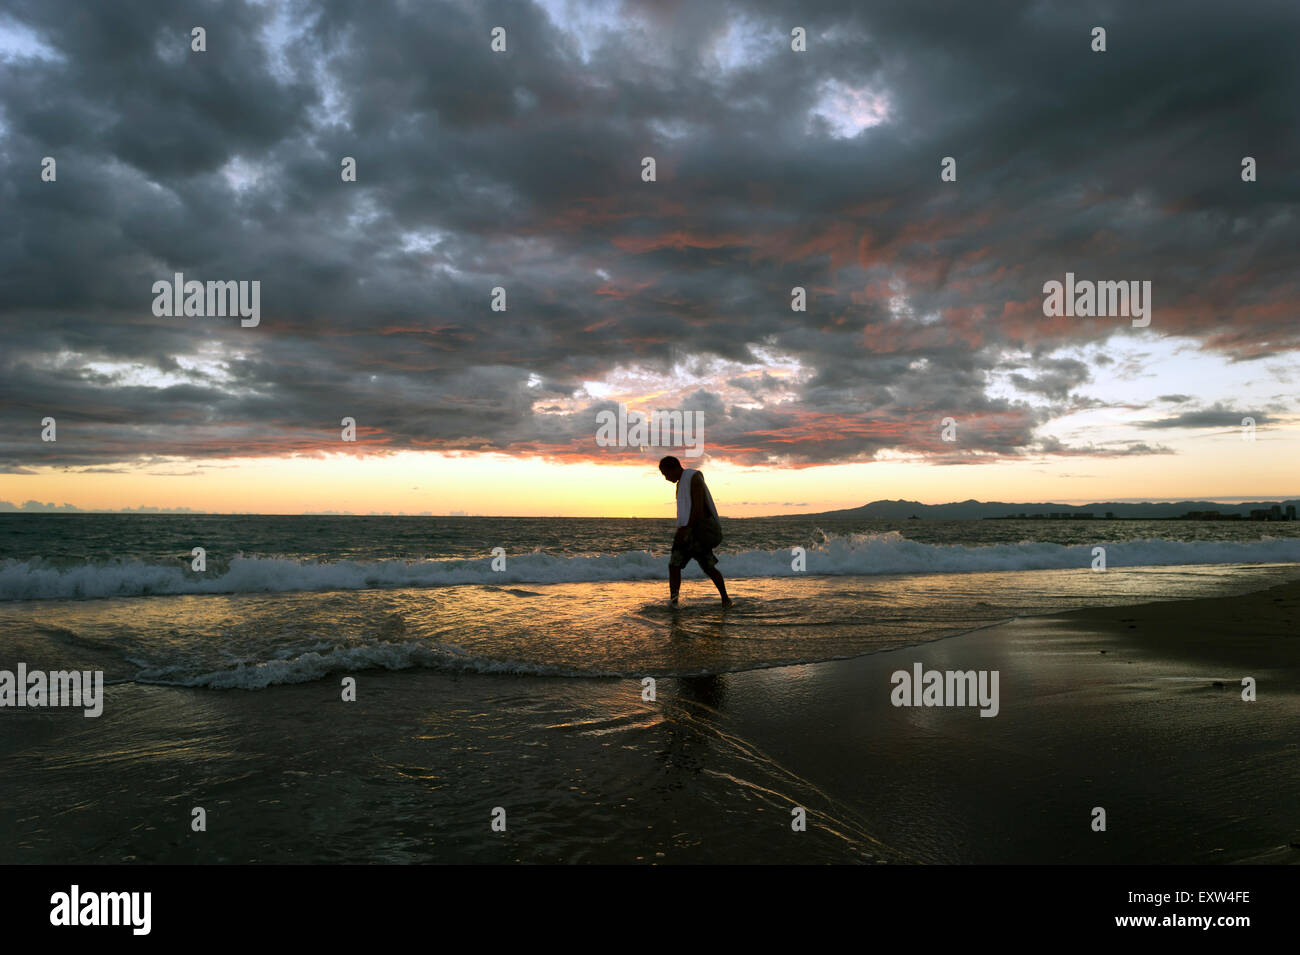 Solitude man walking alone on beach at sunset. Stock Photo